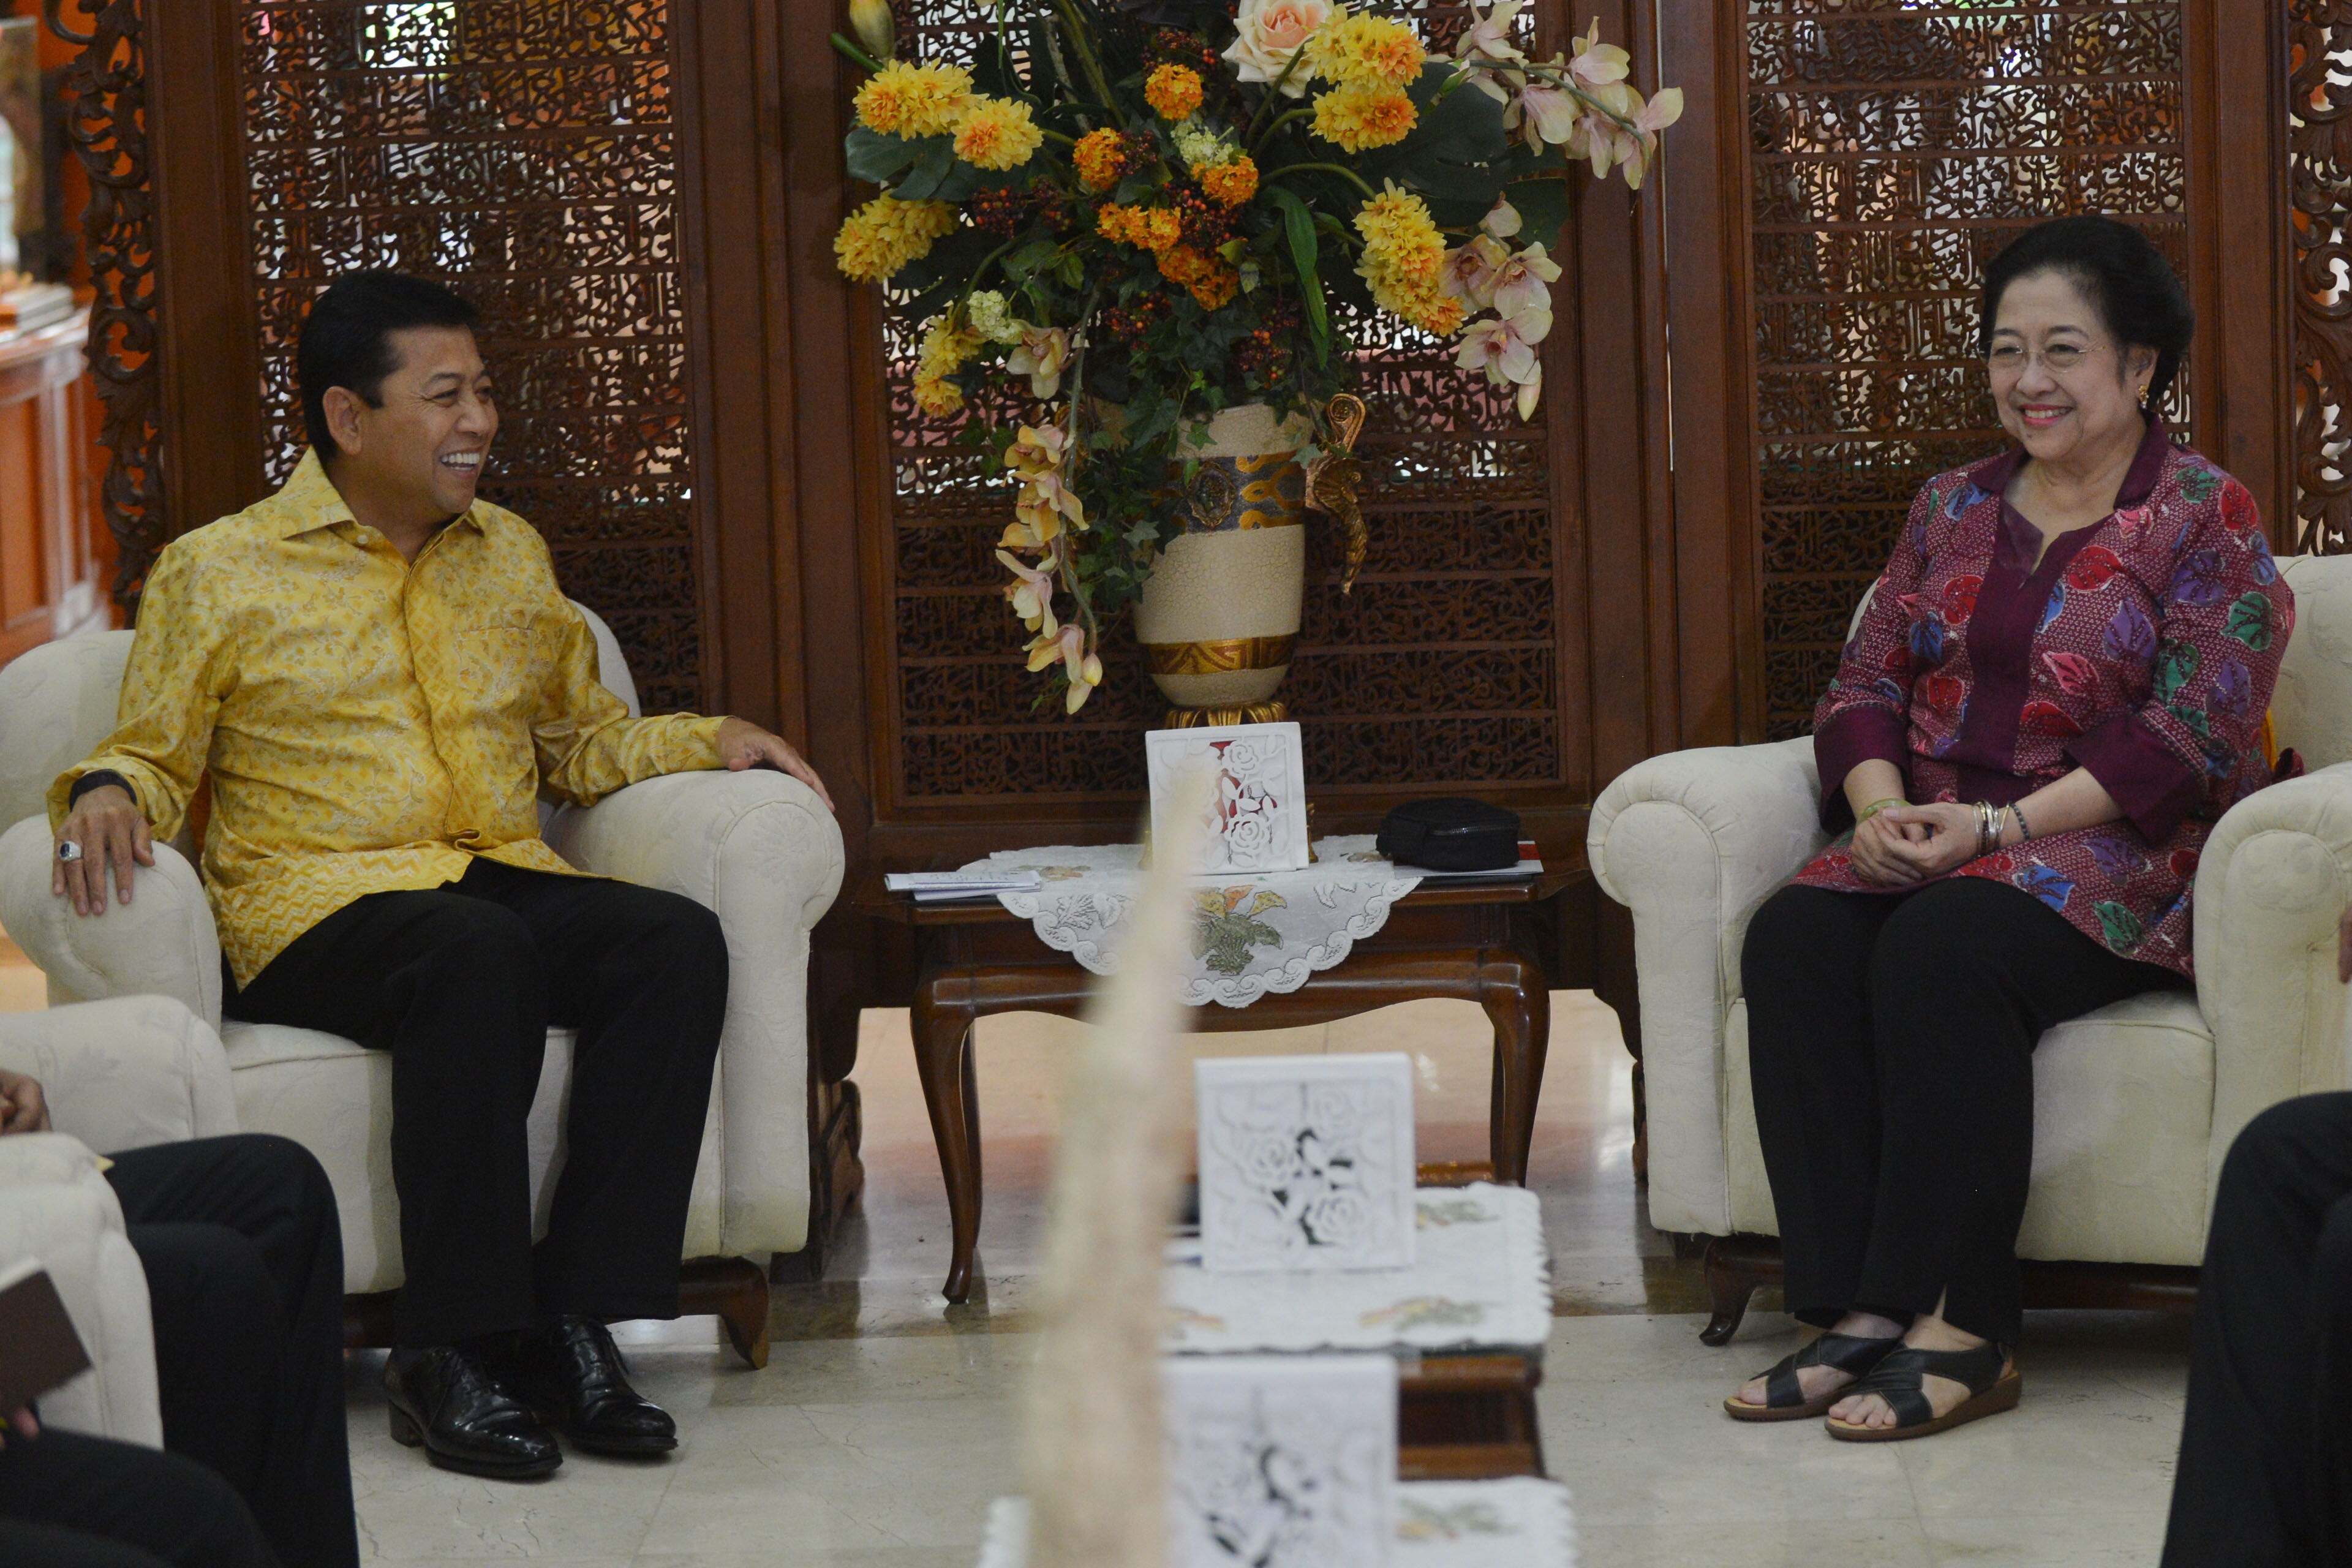 Ketua Umum PDIP Megawati Soekarnoputri (kanan) bertemu dengan Ketua Umum Partai Golkar Setya Novanto (kiri) sebelum menggelar pertemuan di Jakarta, pada 20 November 2016. Foto oleh Akbar Nugroho Gumay/Antara

 